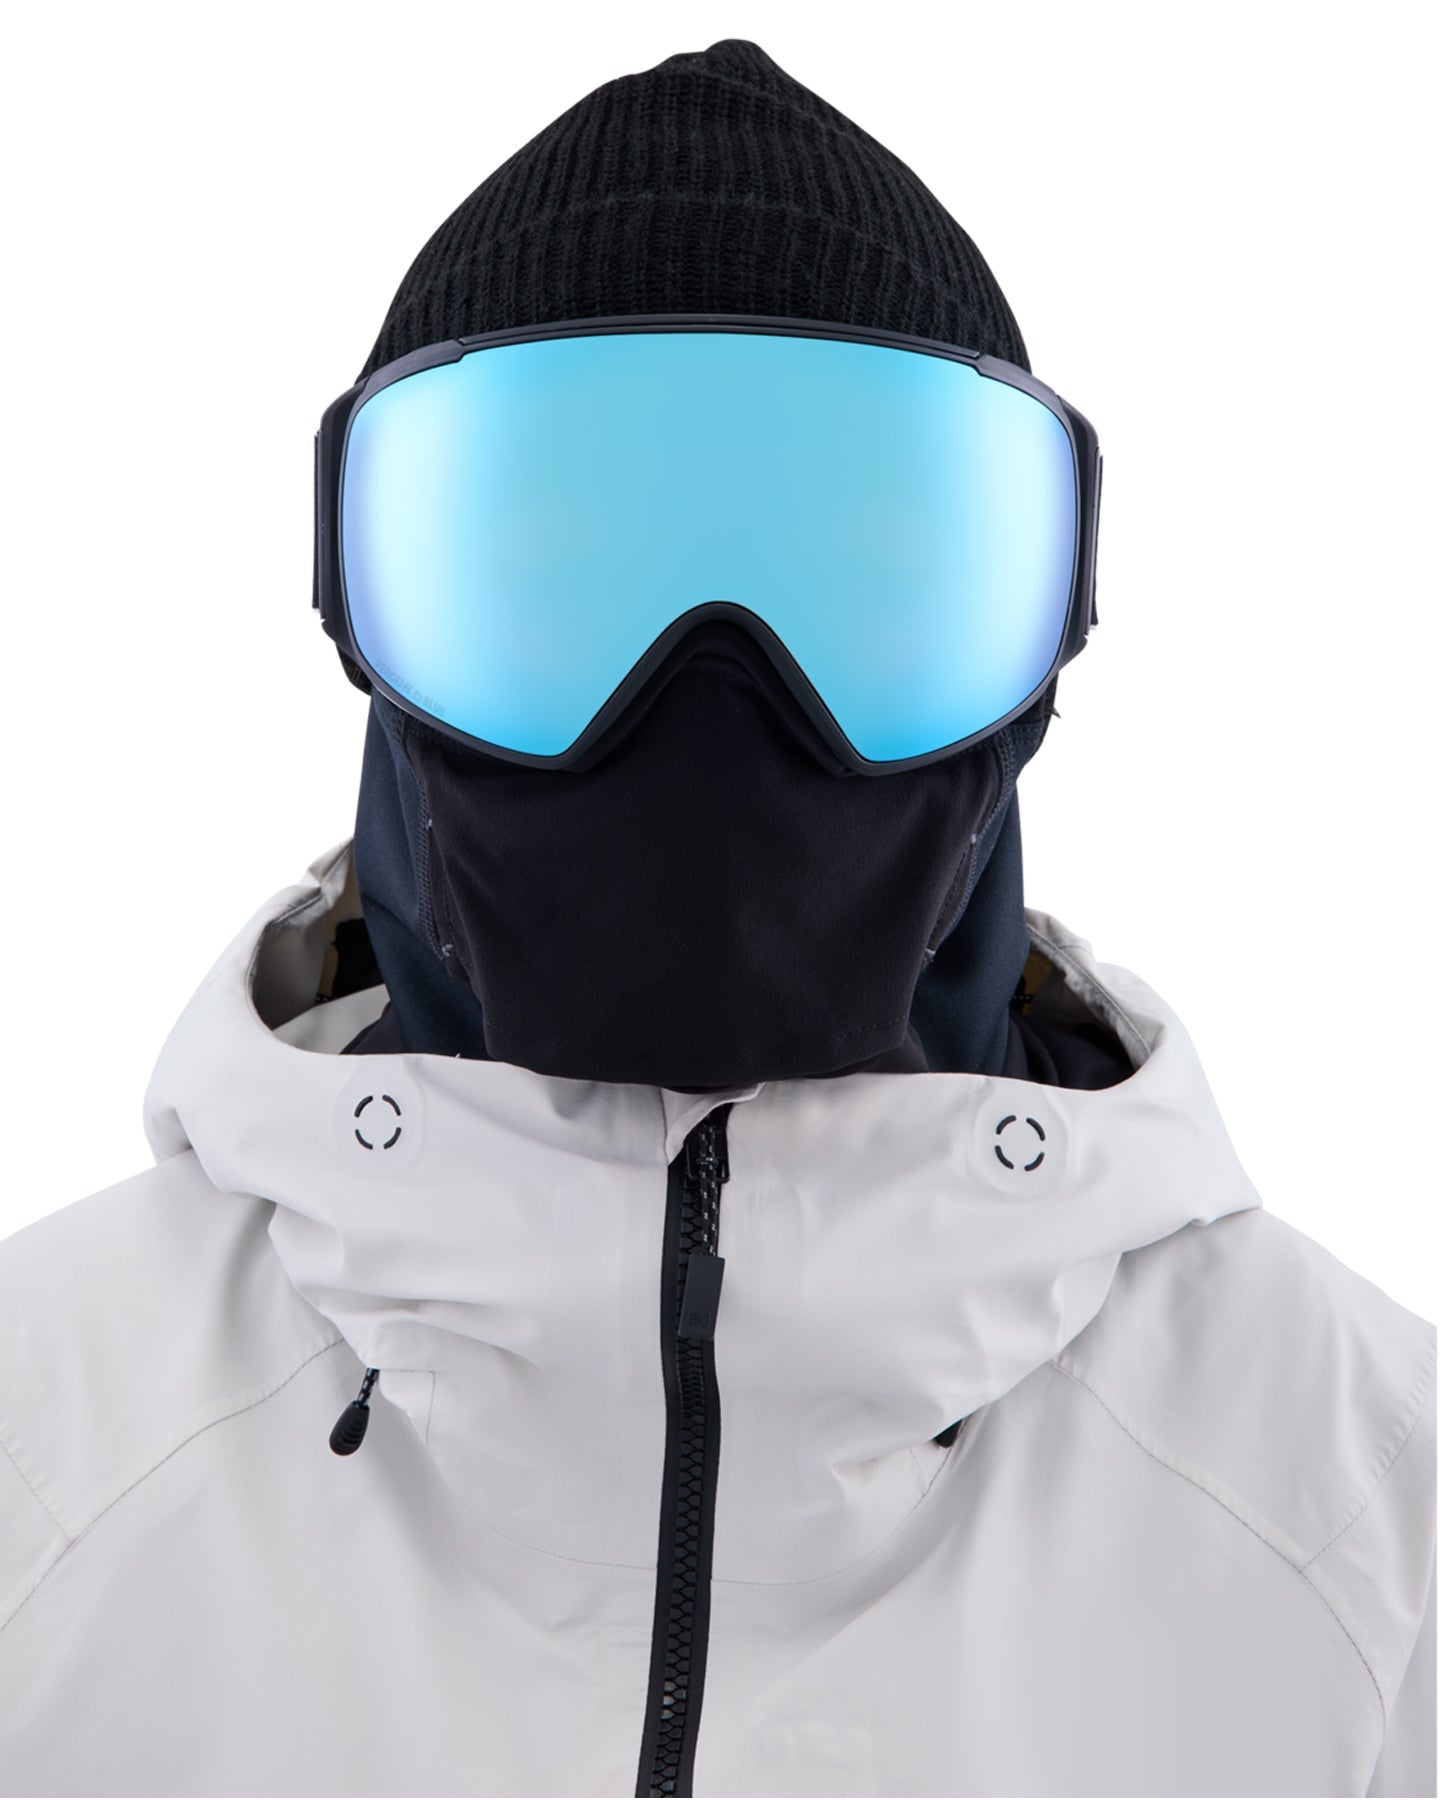 Anon M4S Toric Low Bridge Fit Snow Goggles + Bonus Lens + MFI - Black / Perceive Variable Blue Men's Snow Goggles - Trojan Wake Ski Snow